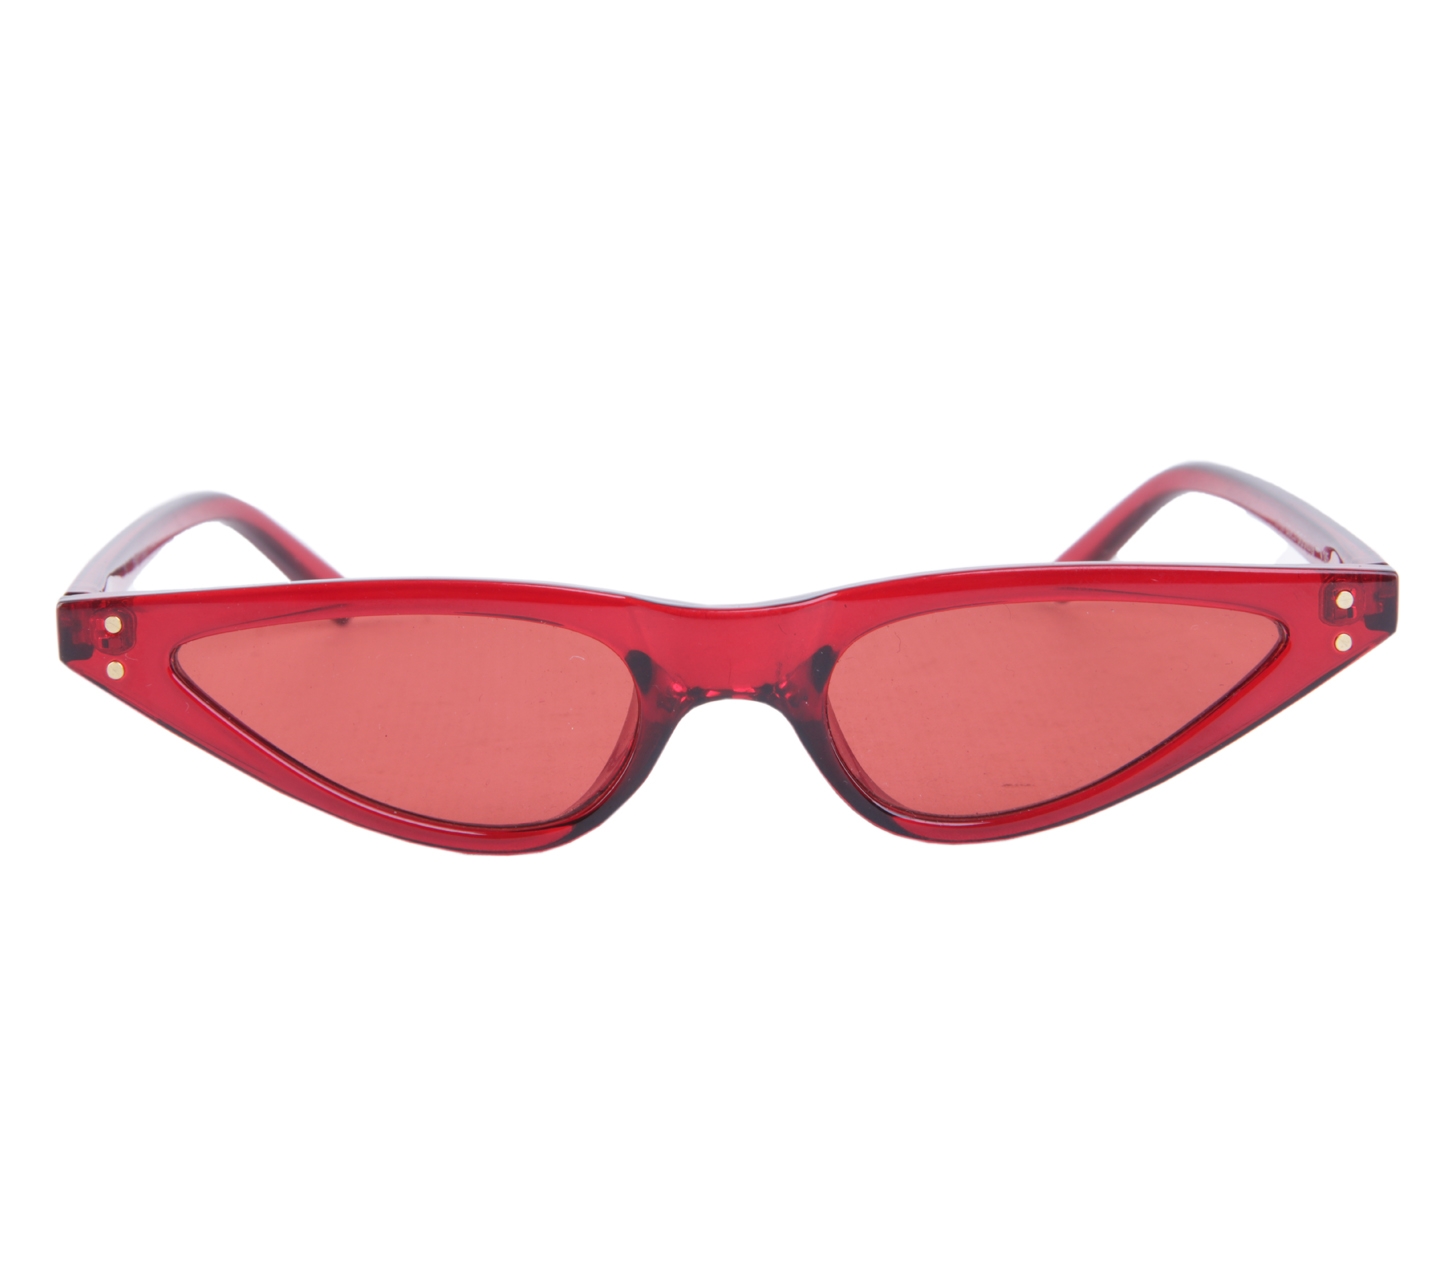 Fashion Nova Red Protection Sunglasses